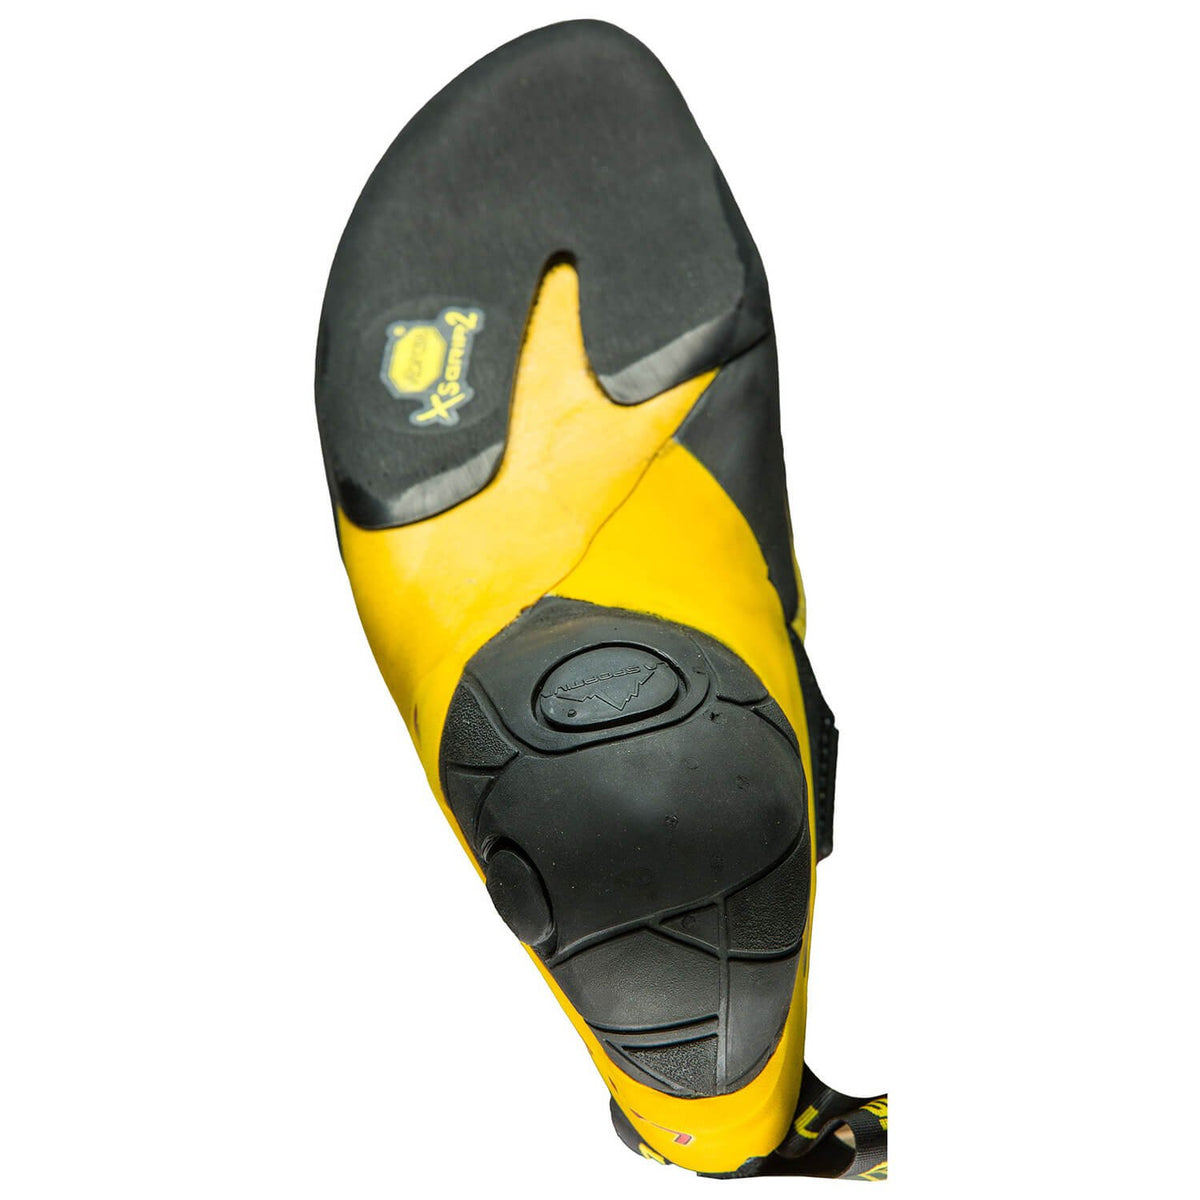 La Sportiva Skwama climbing shoe, view of the sole